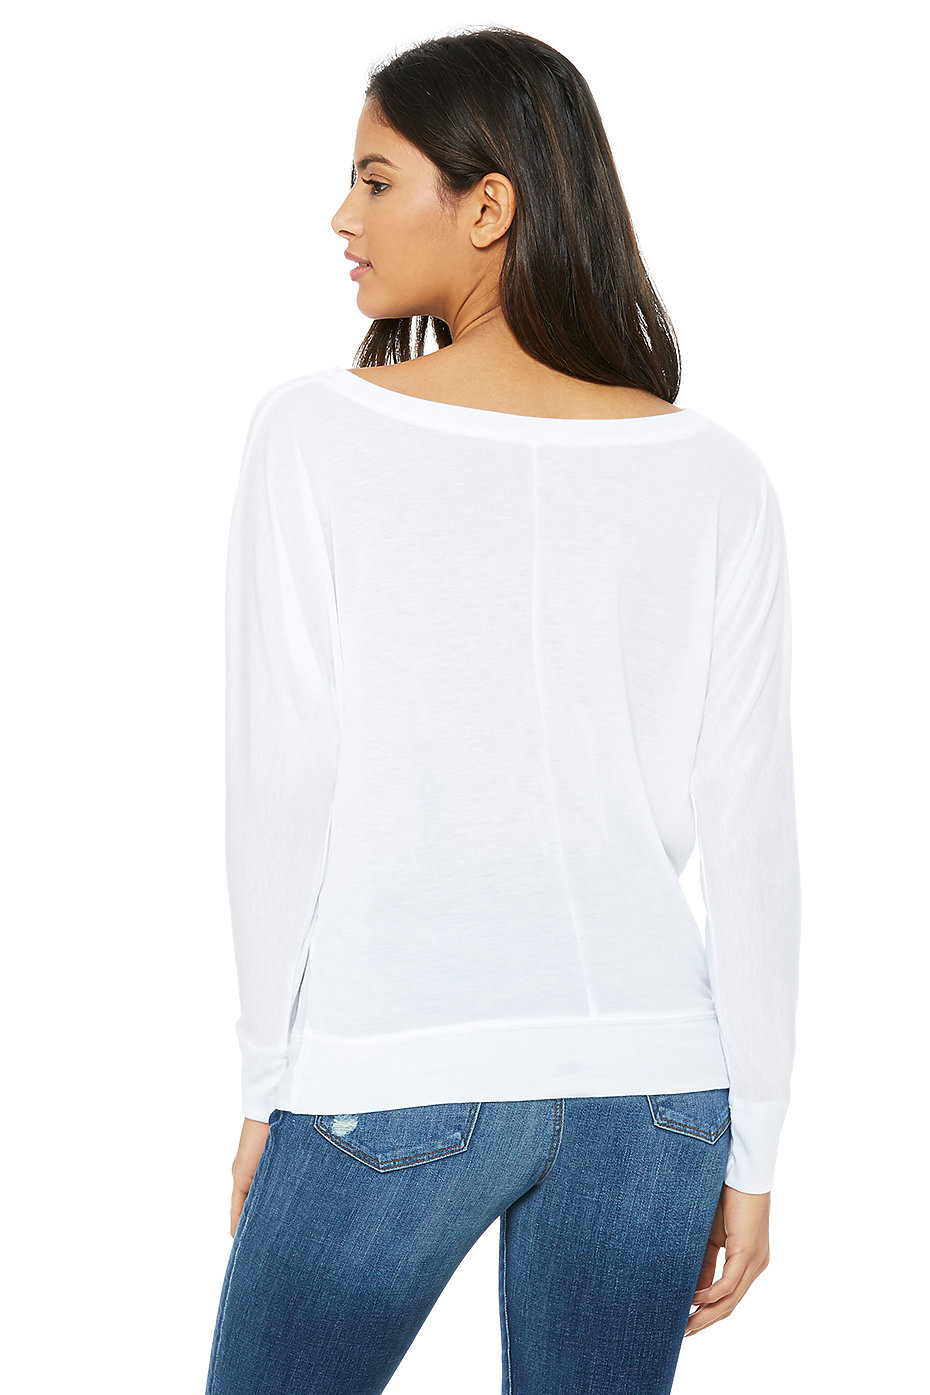 Long-Sleeve Off Shoulder T-ShirtS WHITE 8850 Bella Ladies 3.7 oz